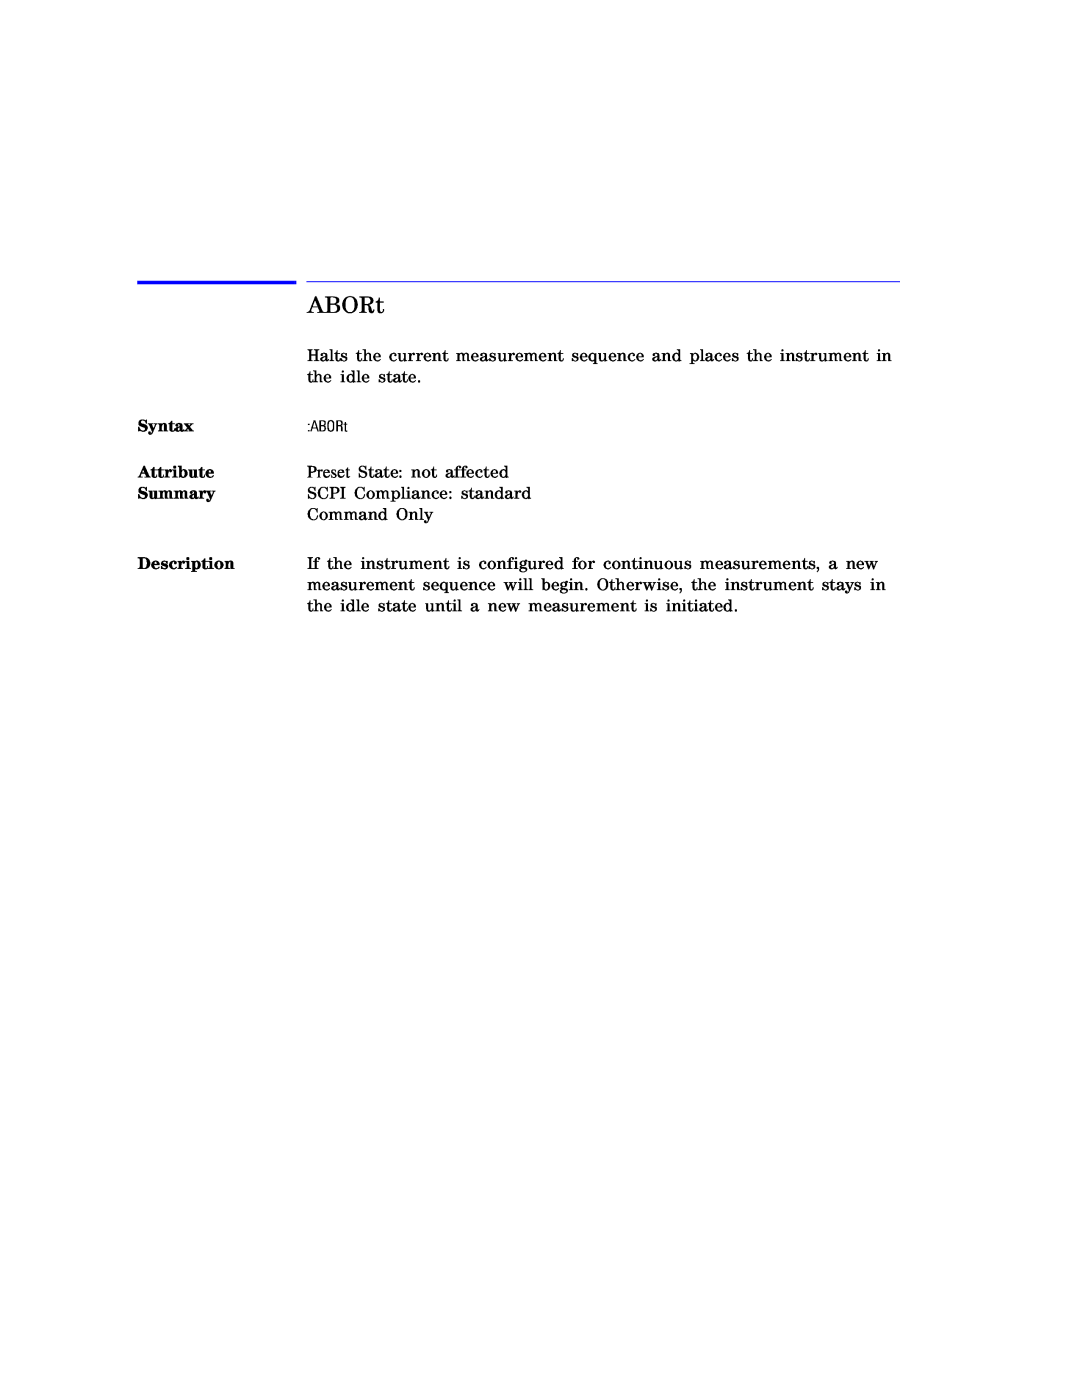 Agilent Technologies Agilent 86120C manual ABORt, Syntax, Attribute, Summary, Description 